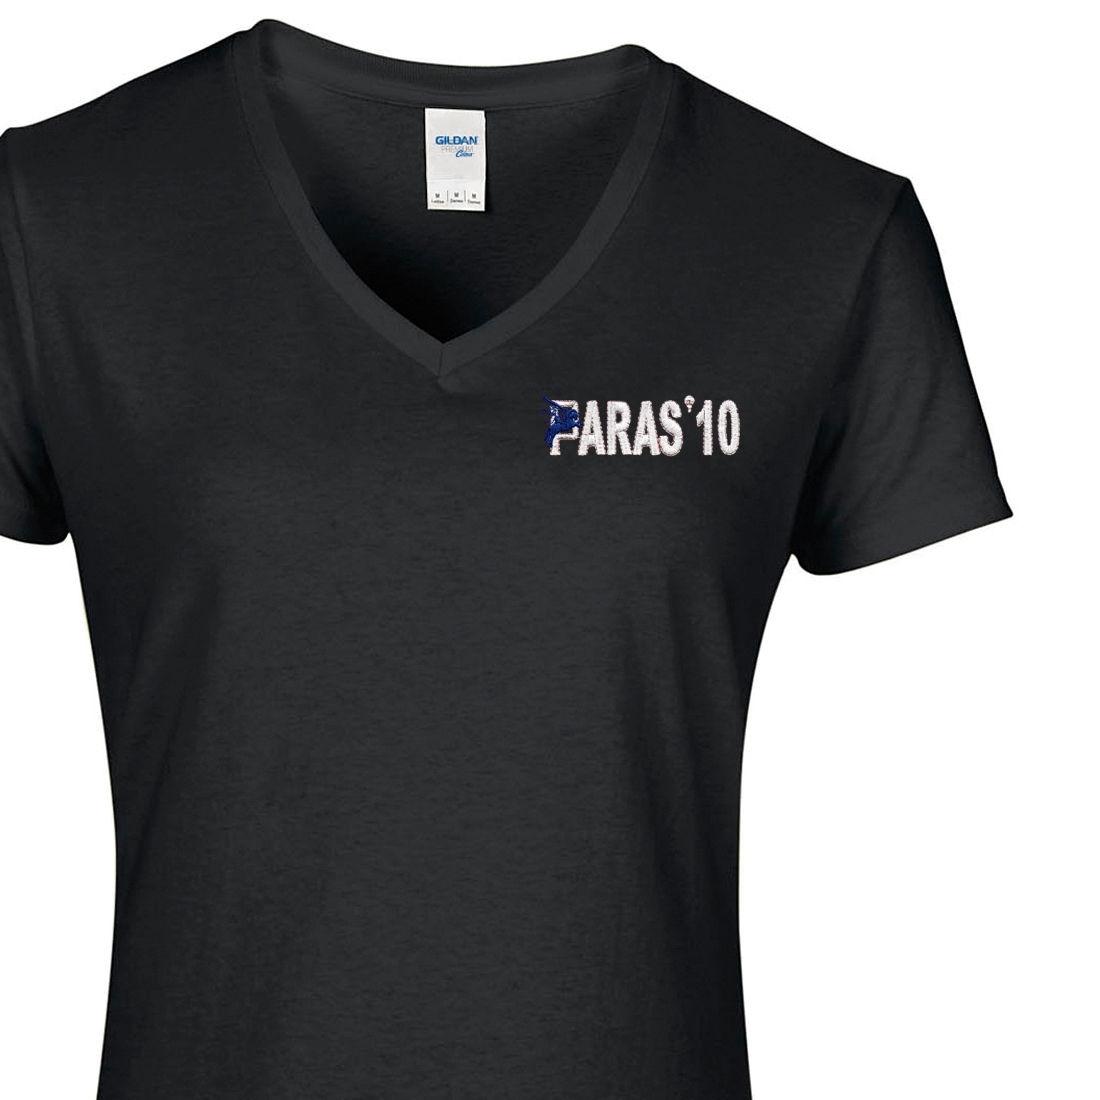 Lady's V-Neck T-Shirt - Black - Paras 10